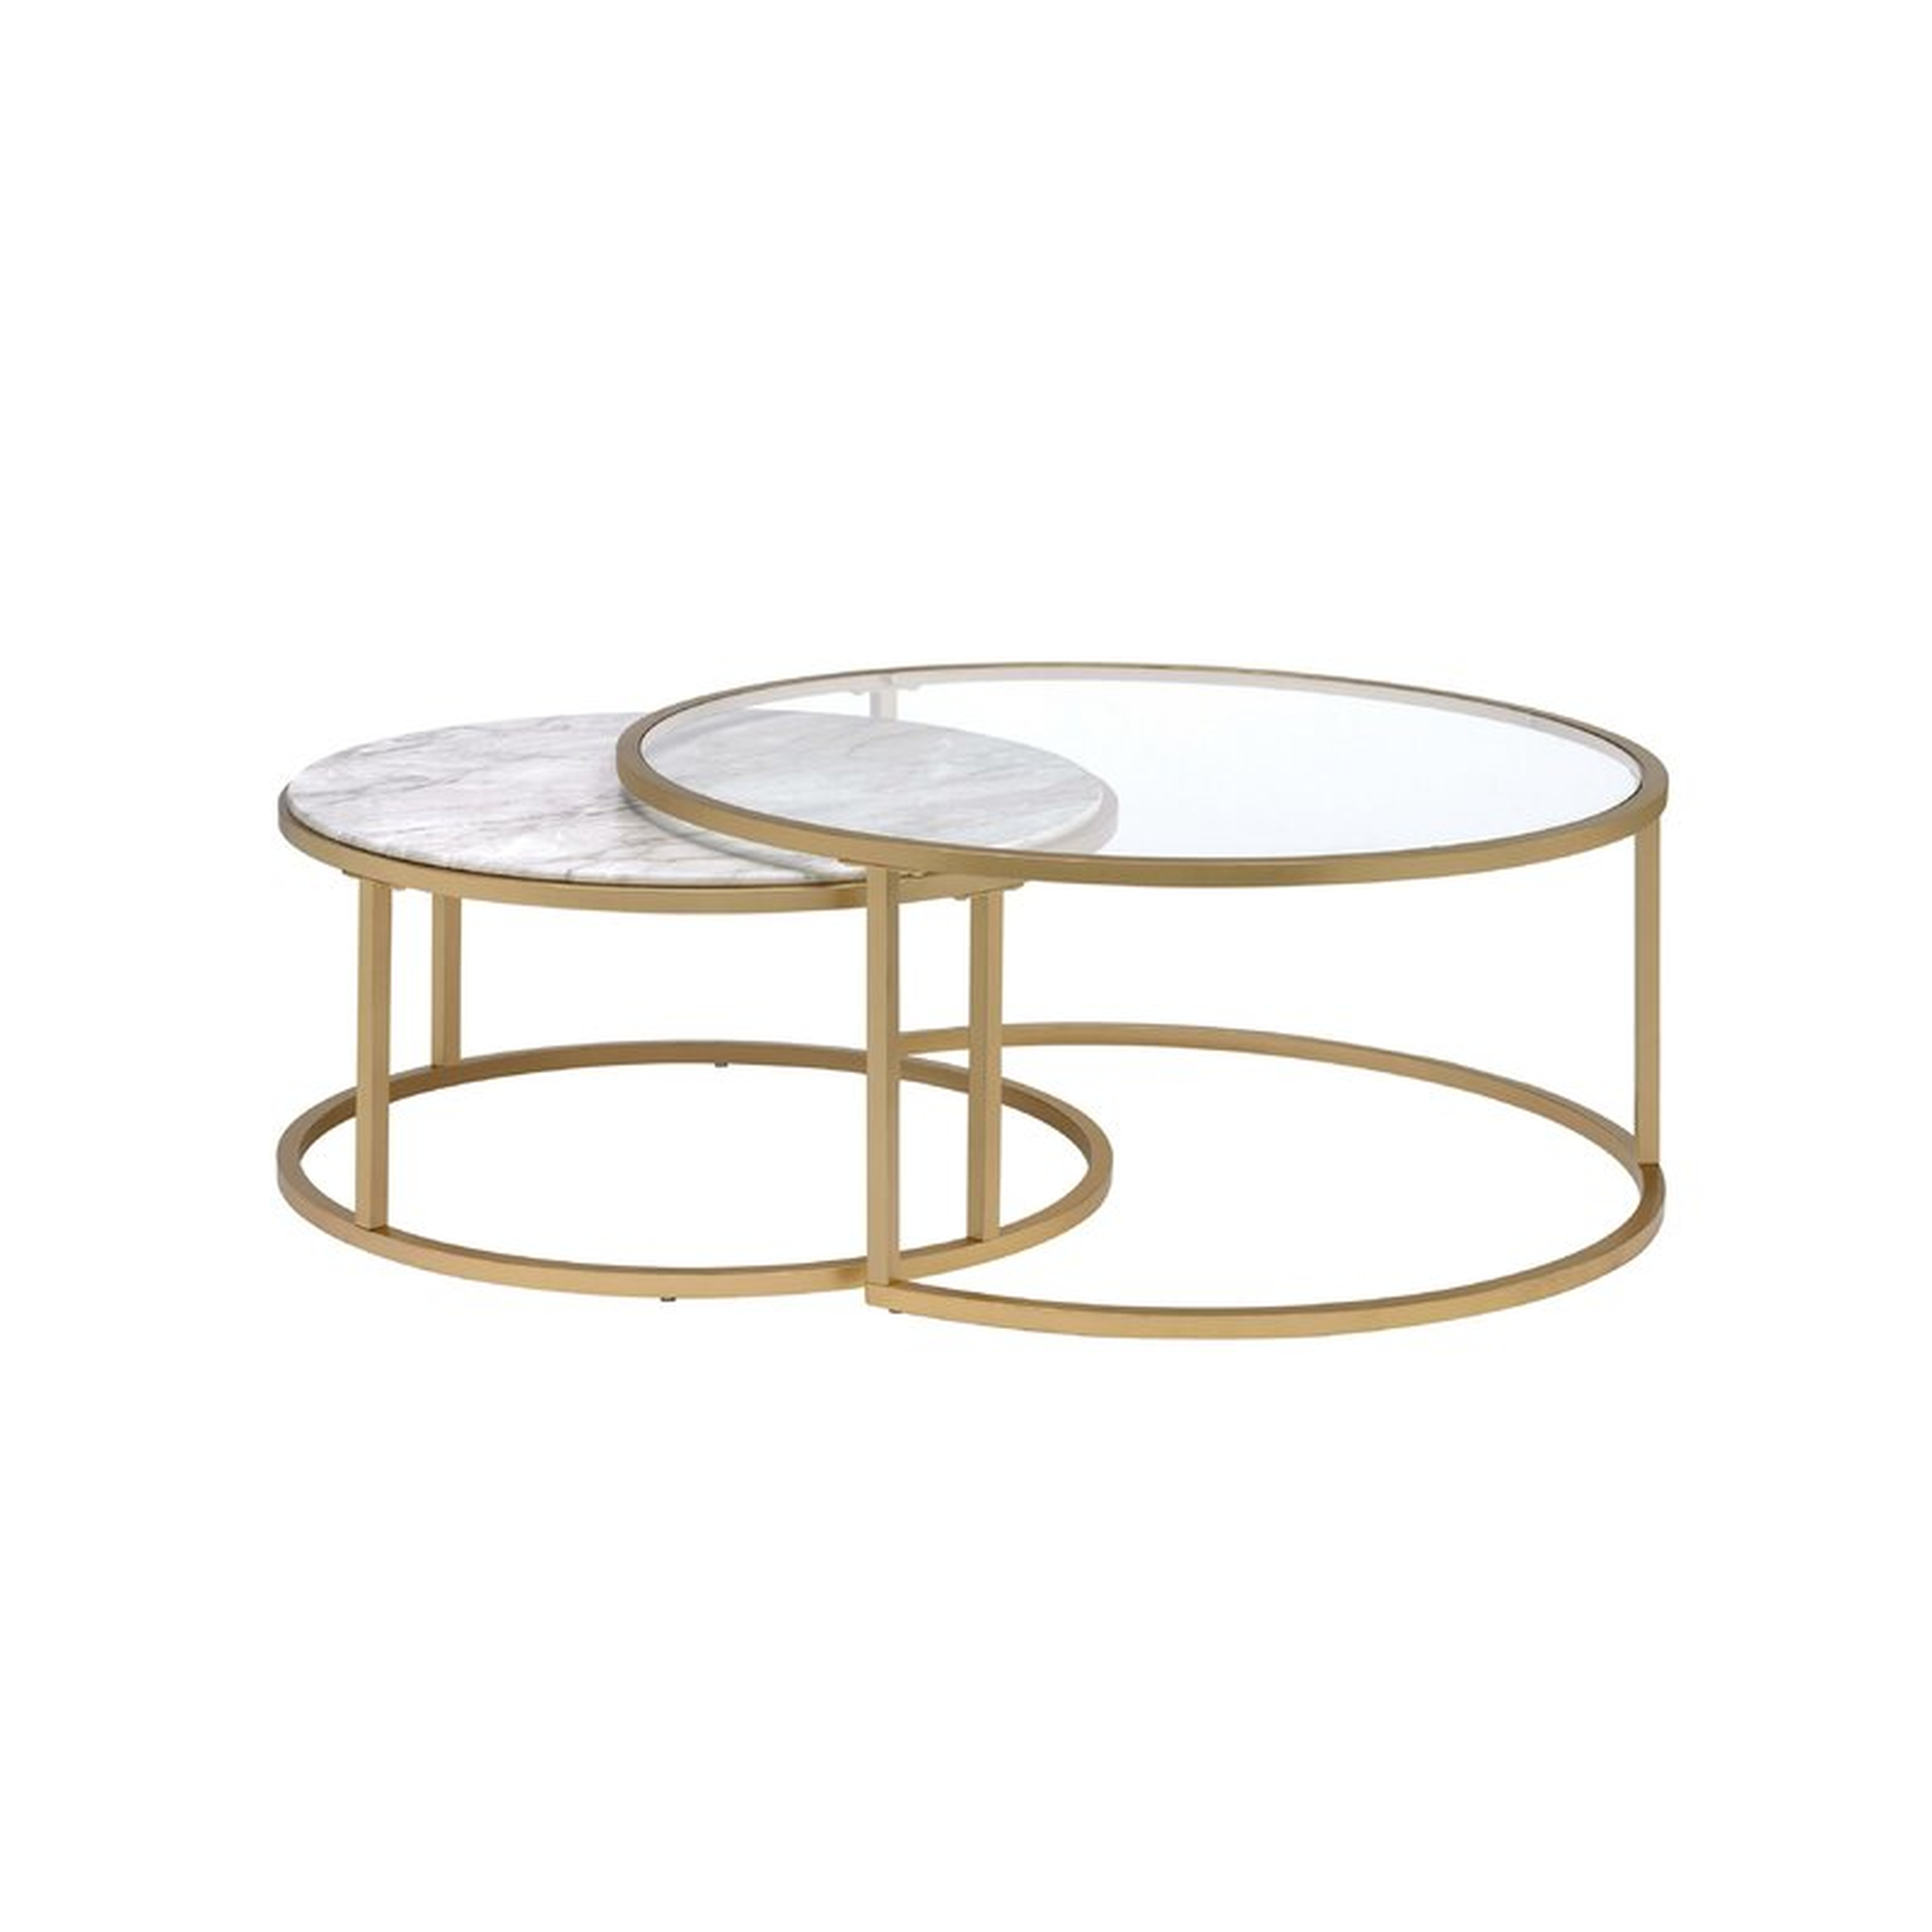 Kellan 2 Piece Coffee Table Set with Tray Top - Wayfair